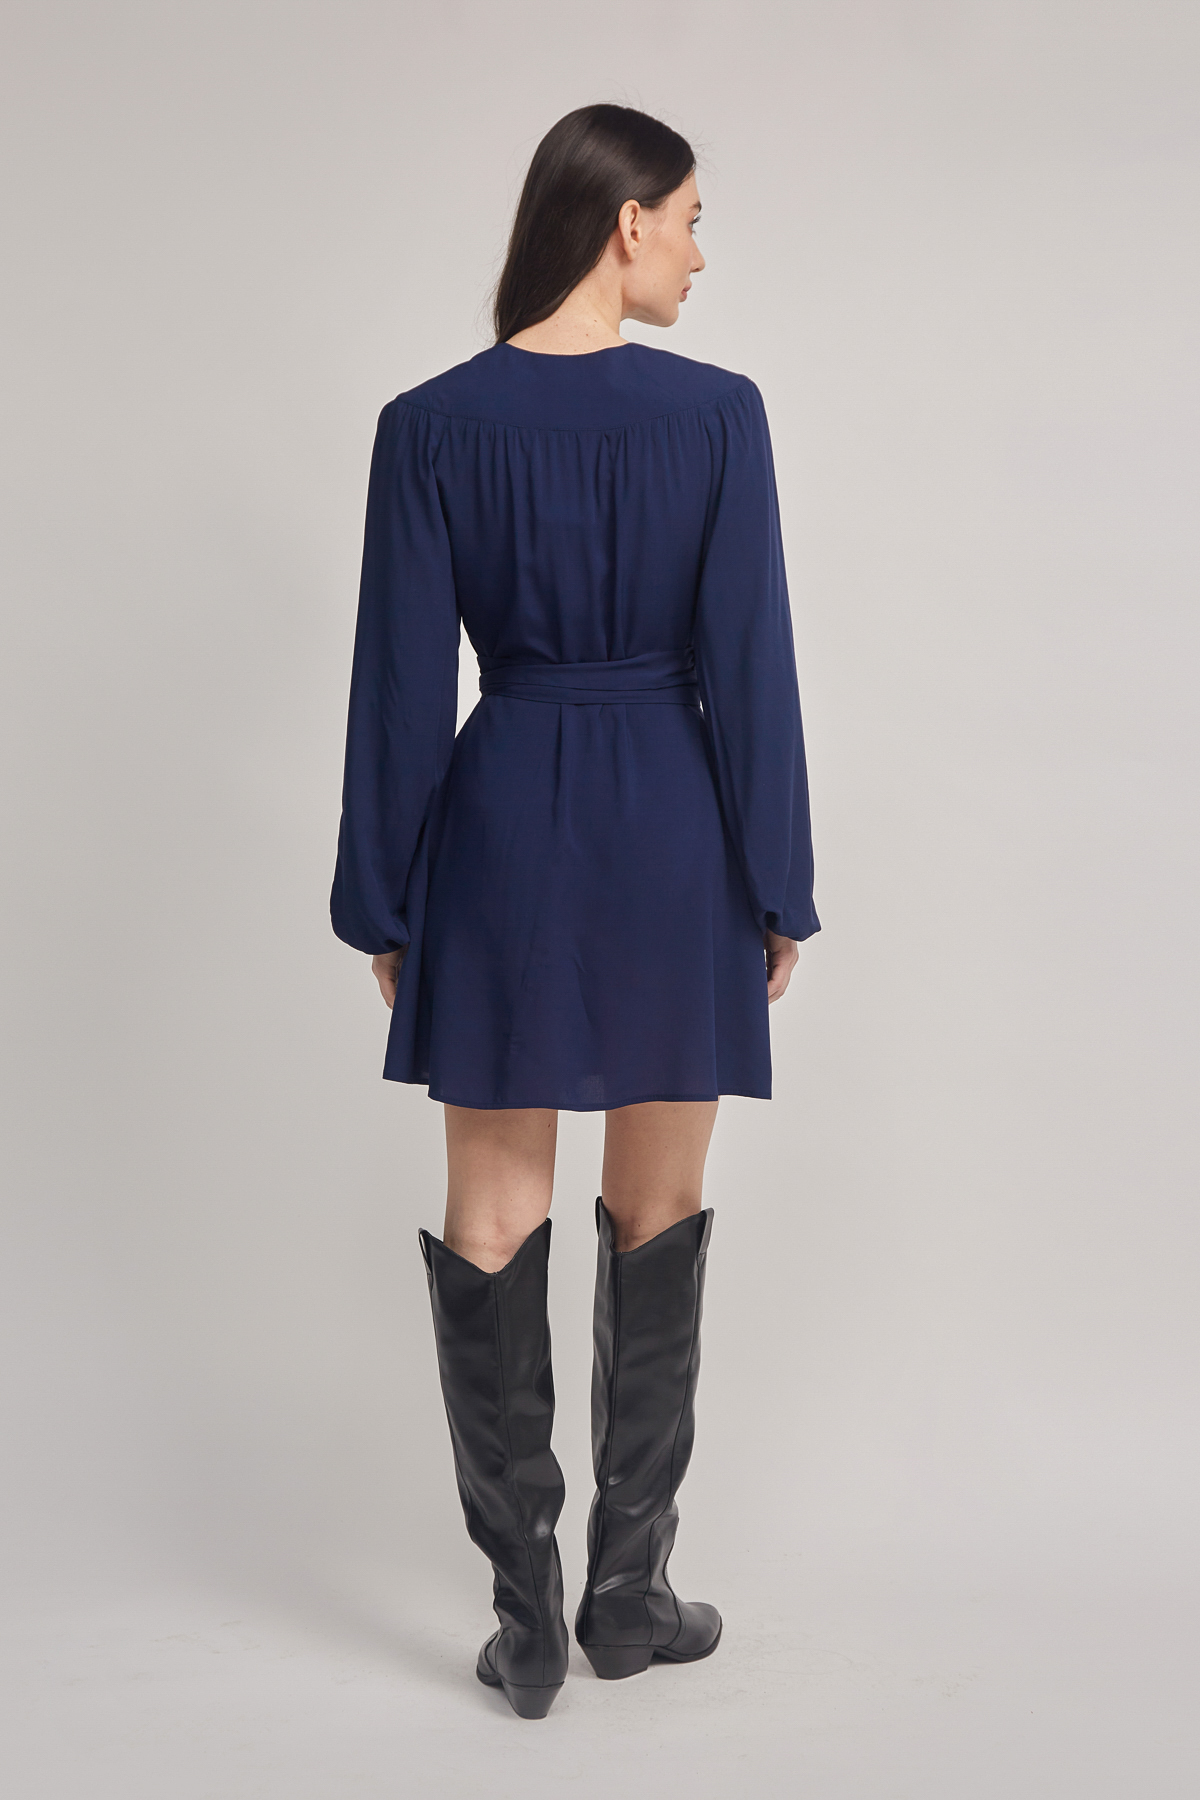 Blue short dress, photo 5